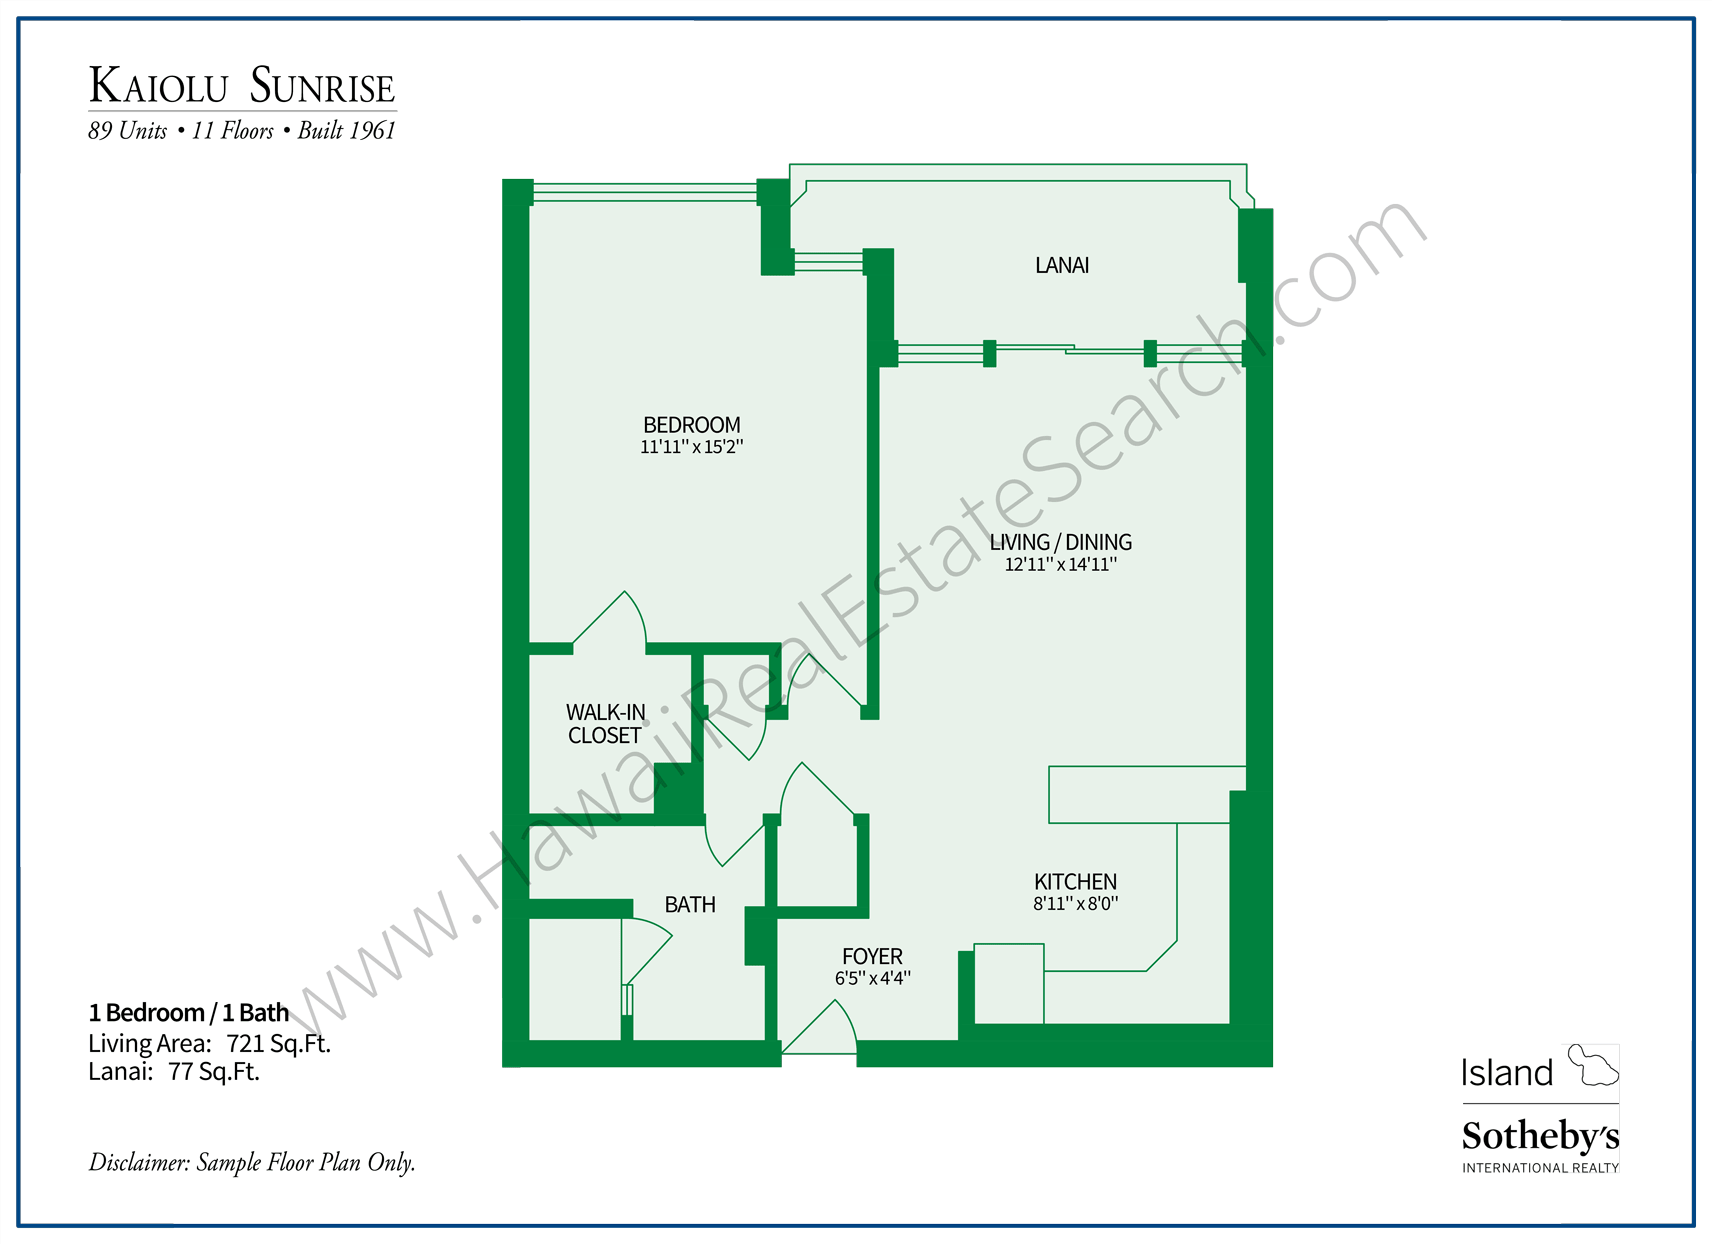 Kaiolu Sunrise Floor Plan